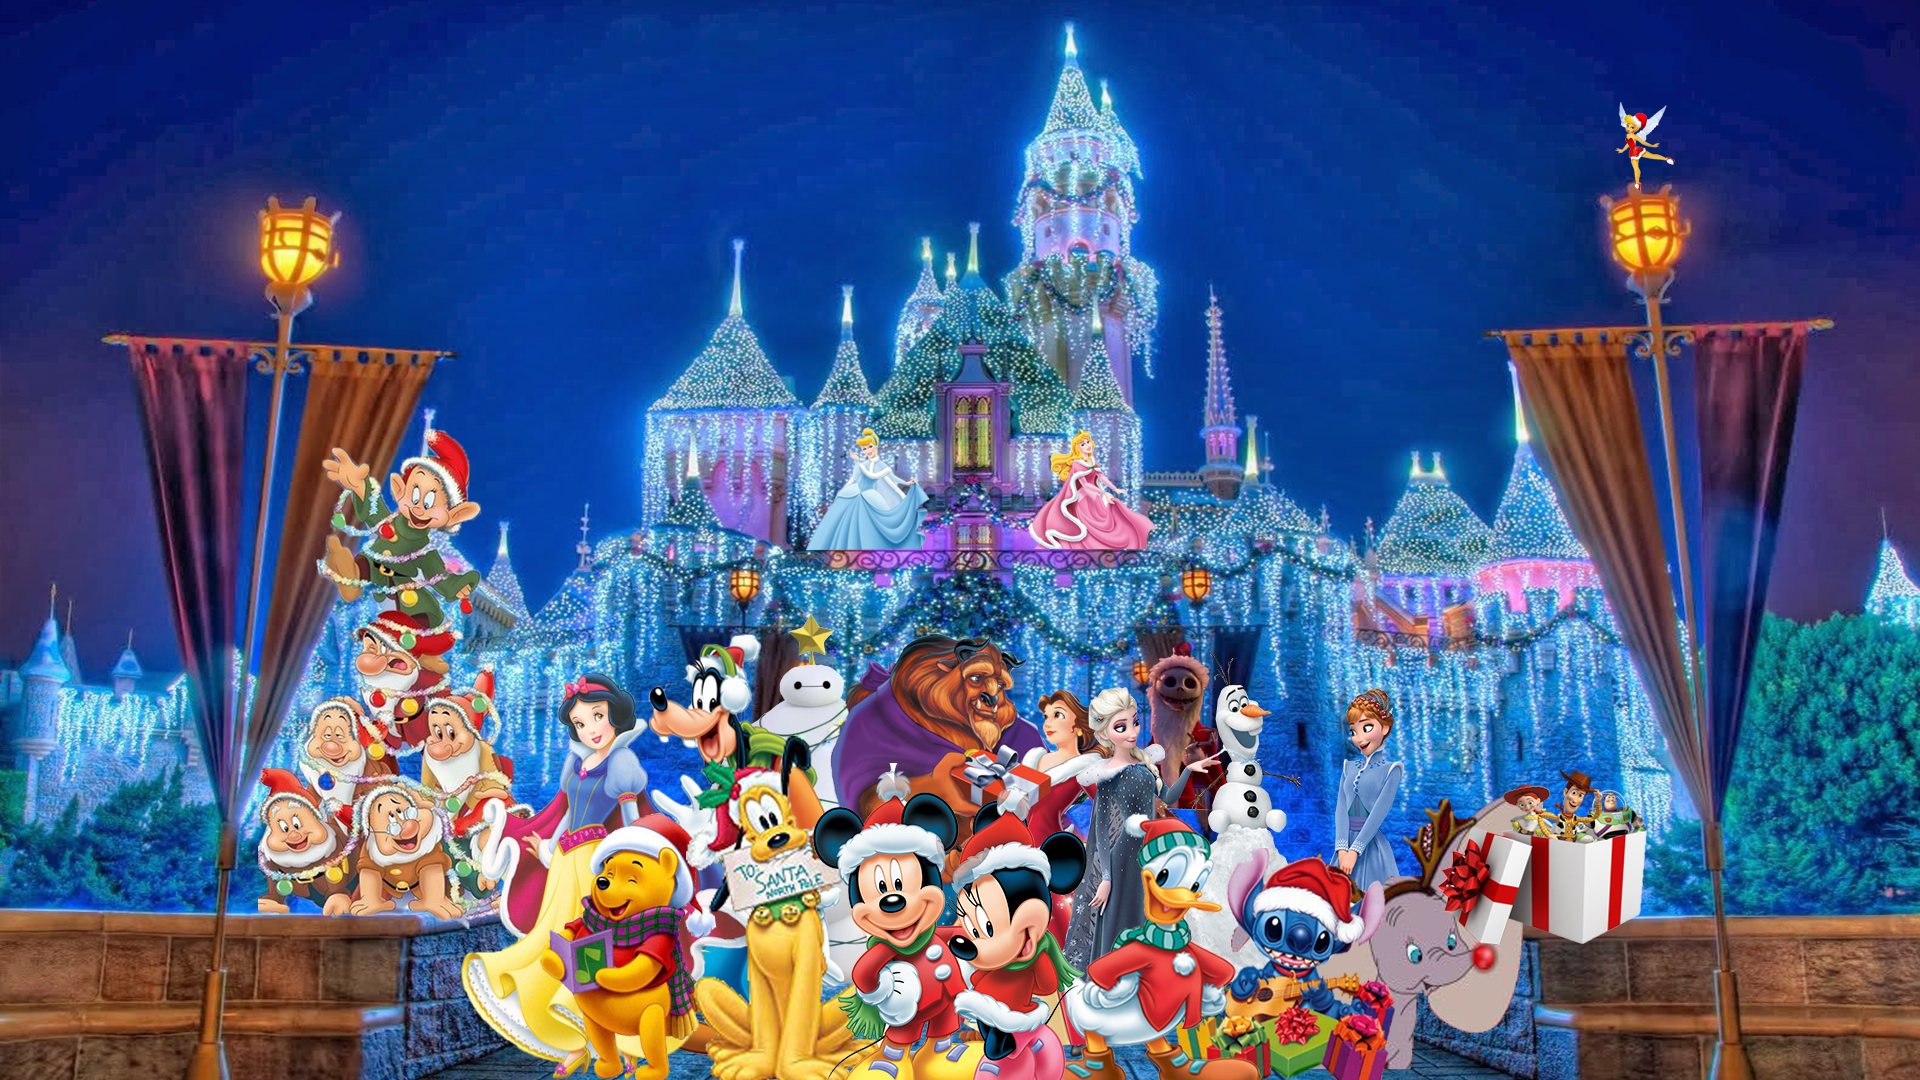 Disneyland Christmas Wallpaper by Thekingblader995 on DeviantArt